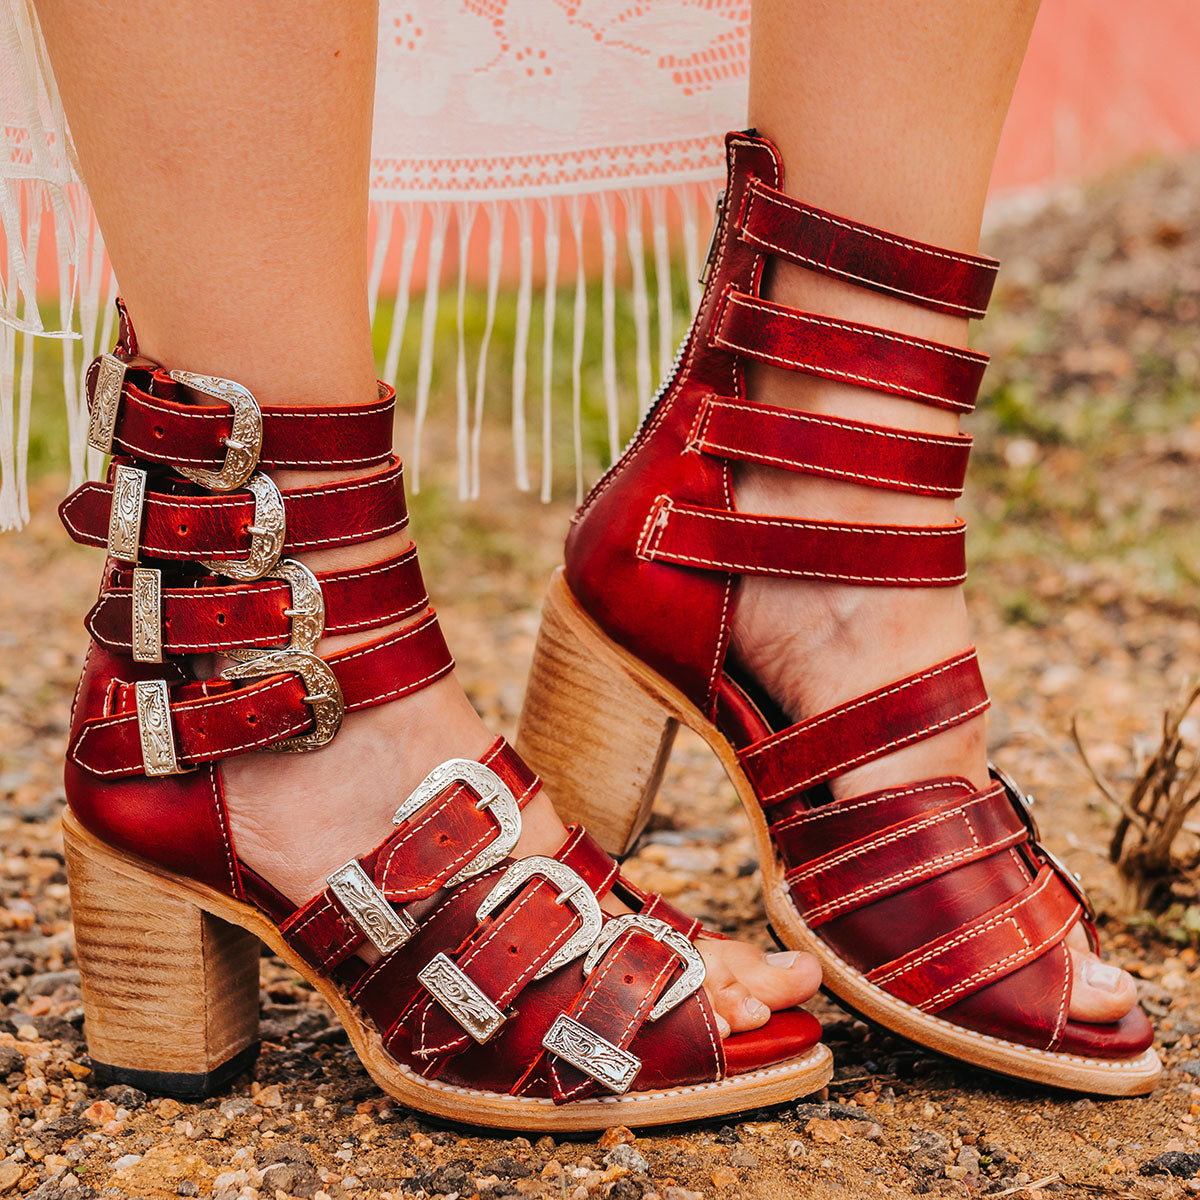 FREEBIRD women's Brooklynn red sandal with straps, metal western buckles and high-heel